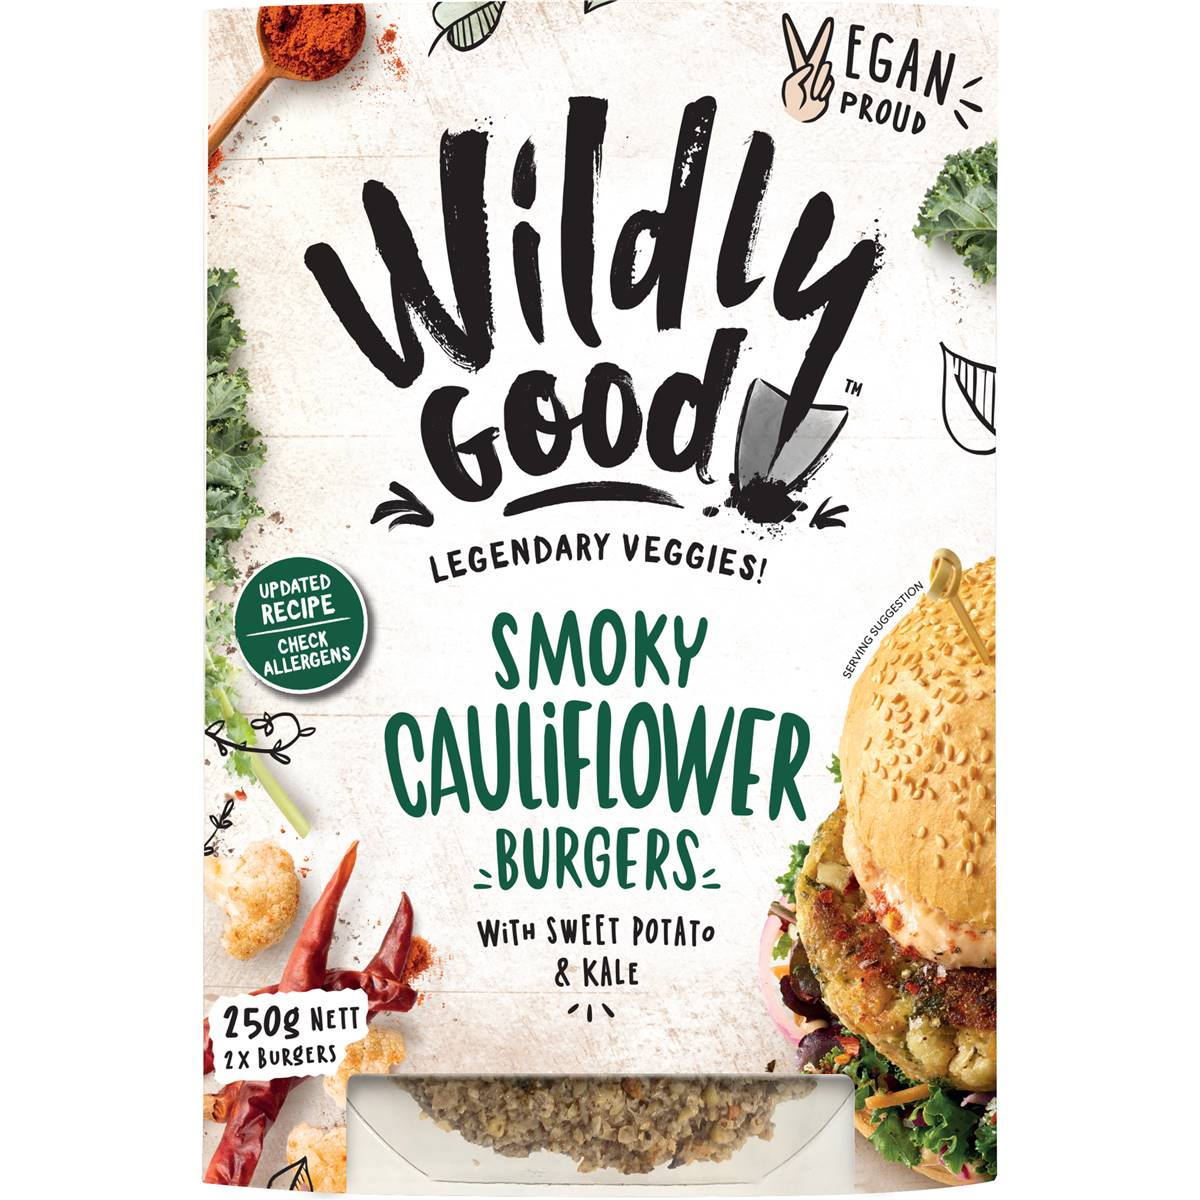 Calories in Wildly Good Smoky Cauliflower Veggie Burgers